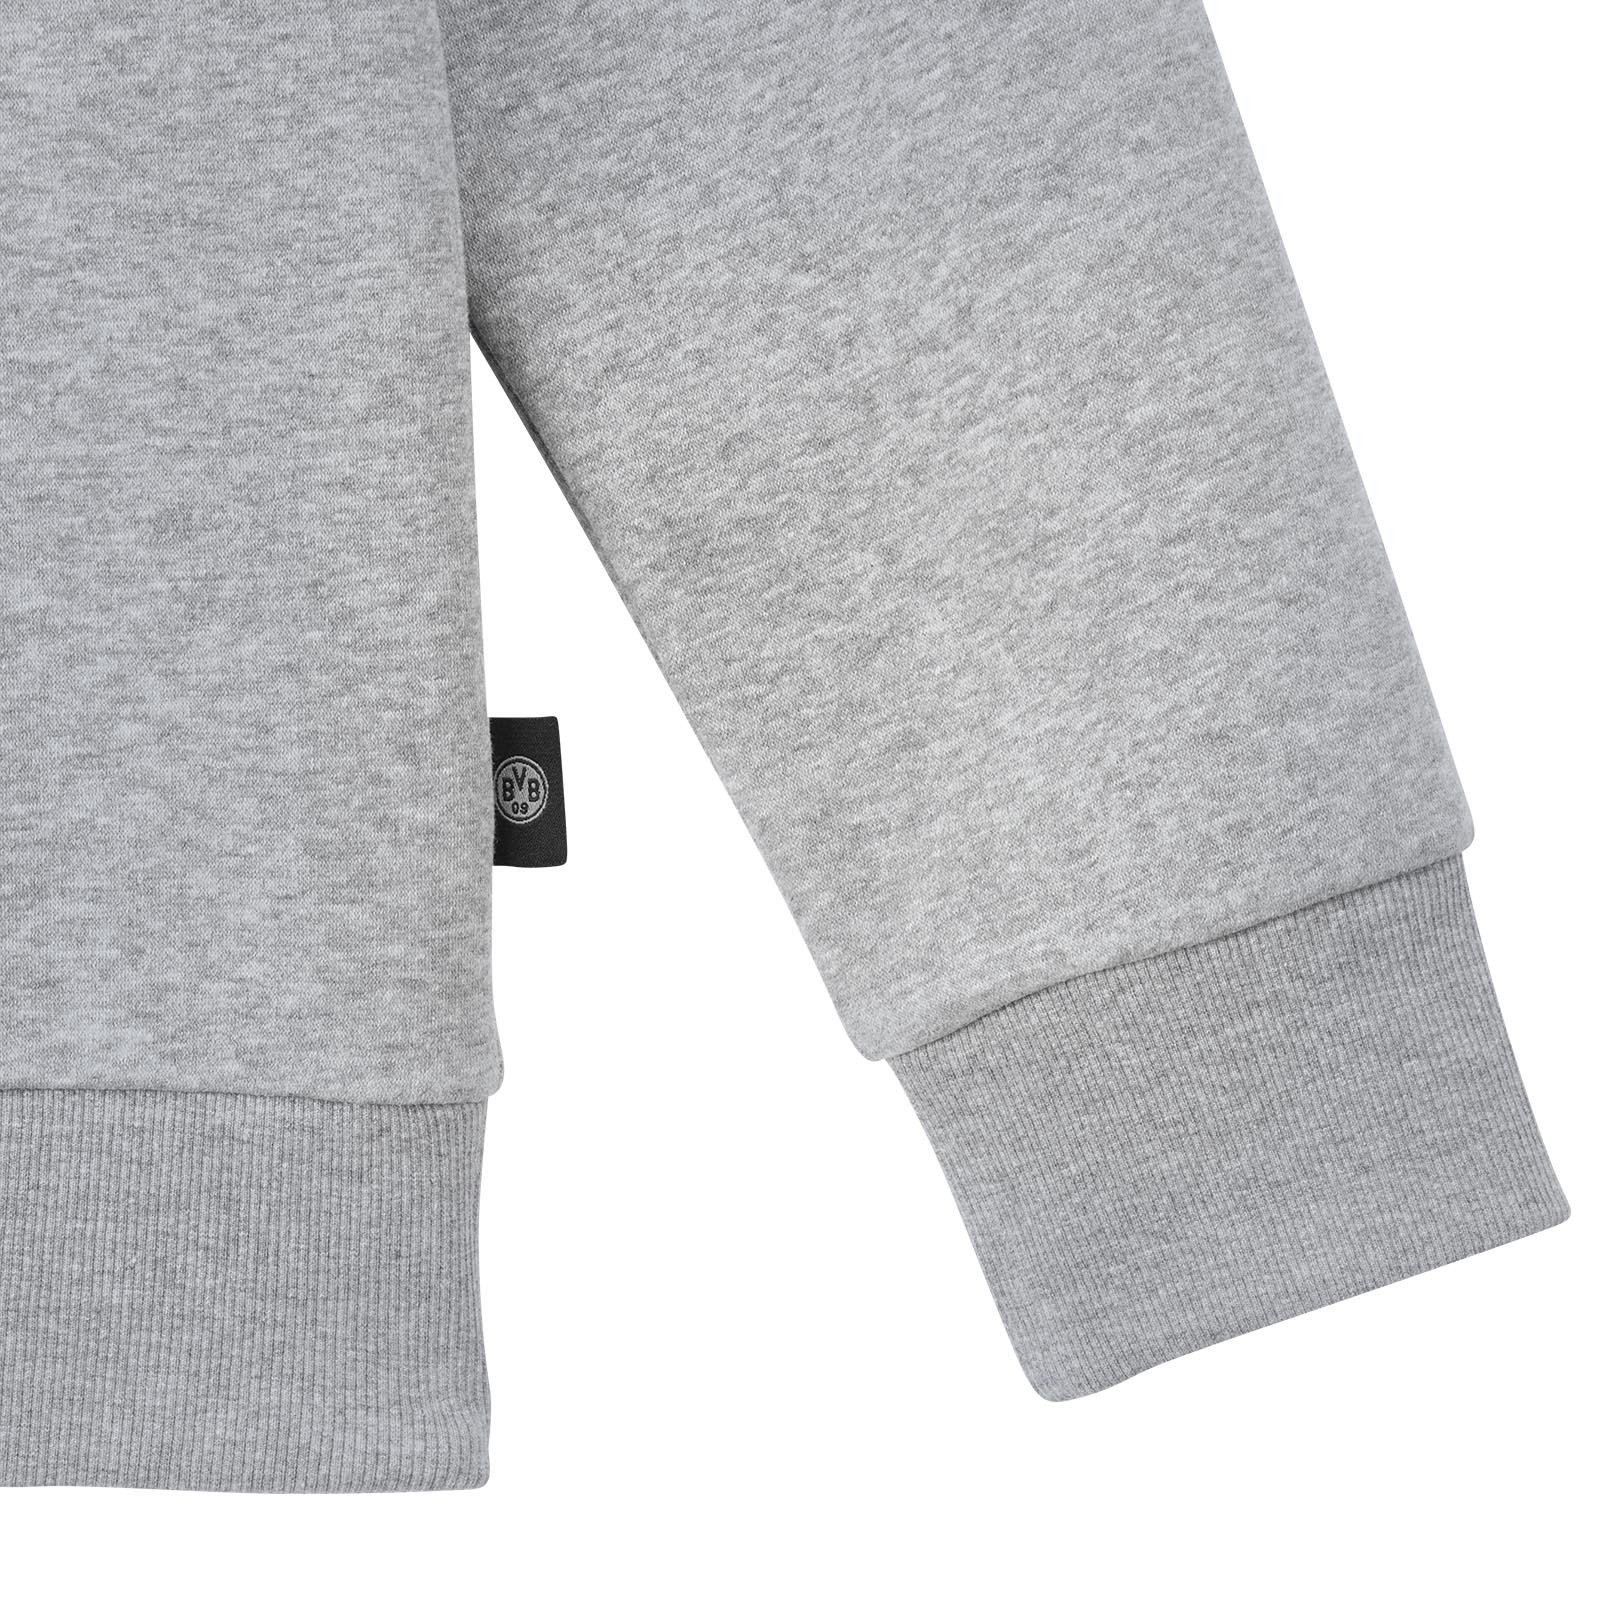 BVB MatchDay Sweatshirt grey | Men | Apparel | BVB Onlineshop